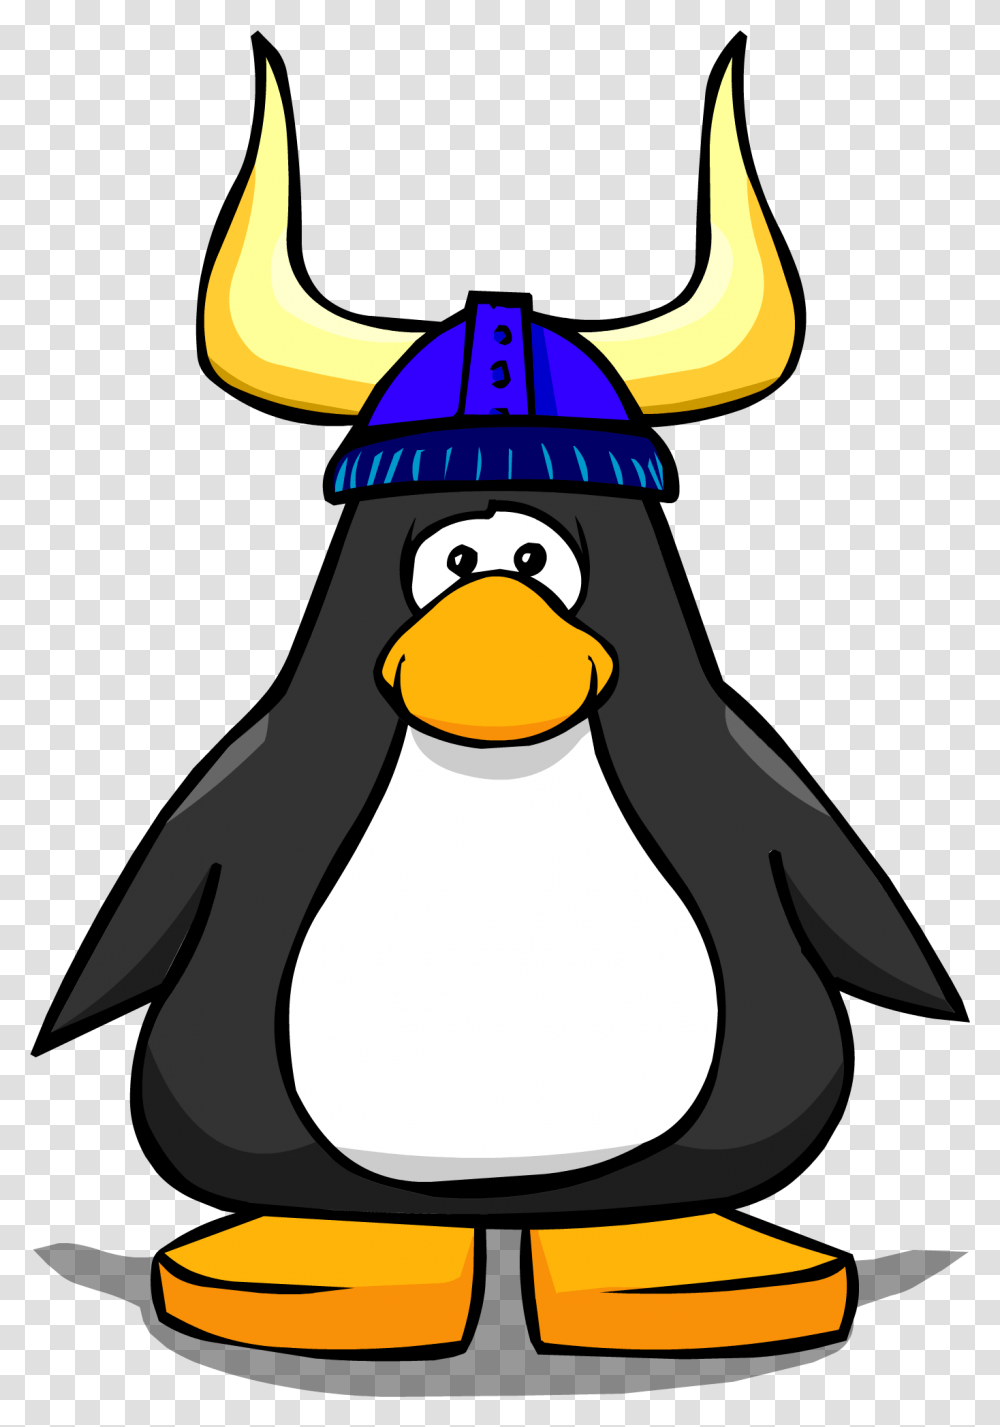 Blue Viking Helmet Player Card Penguin With A Horn, Bird, Animal, King Penguin Transparent Png